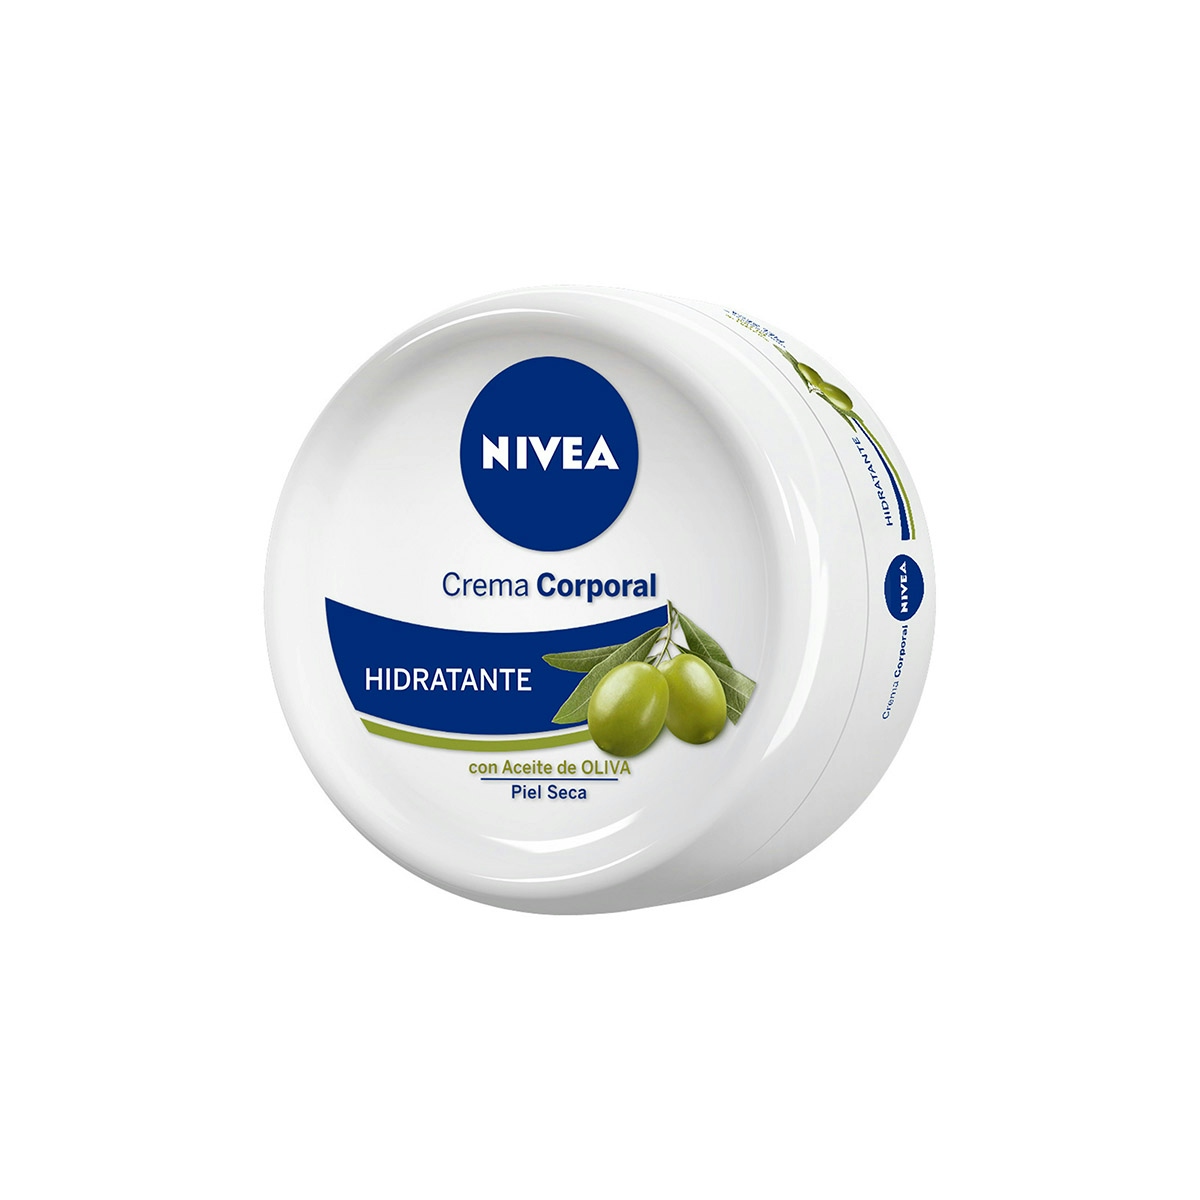 Crema corporal NIVEA aceite de oliva piel seca tarro 300 ml